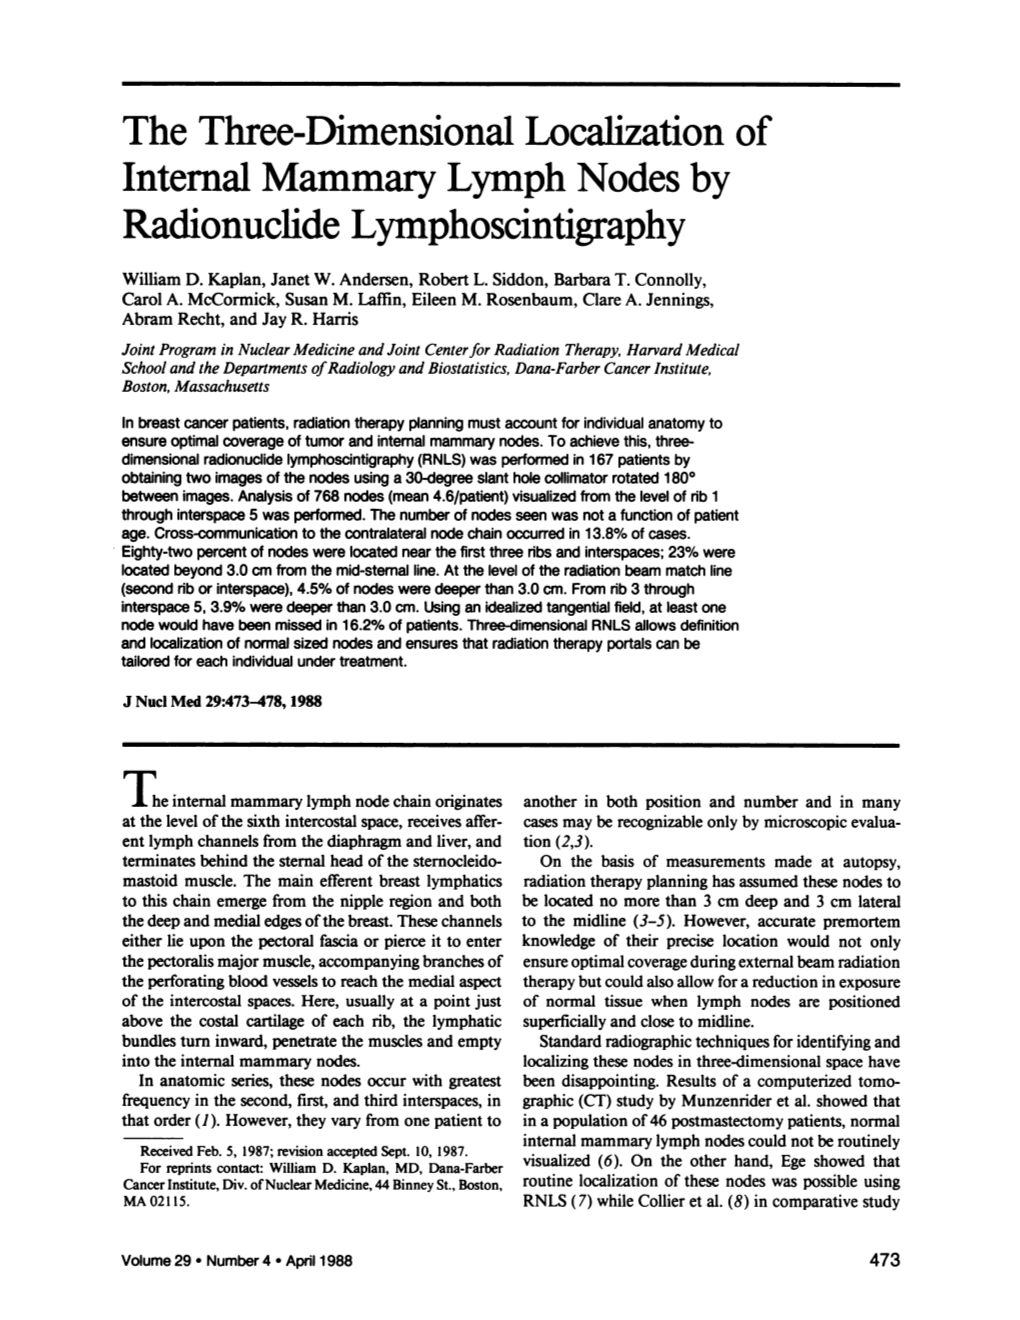 The Three-Dimensional Localization of Internalmammary Lymph Nodes by Radionucide Lymphoscintigraphy